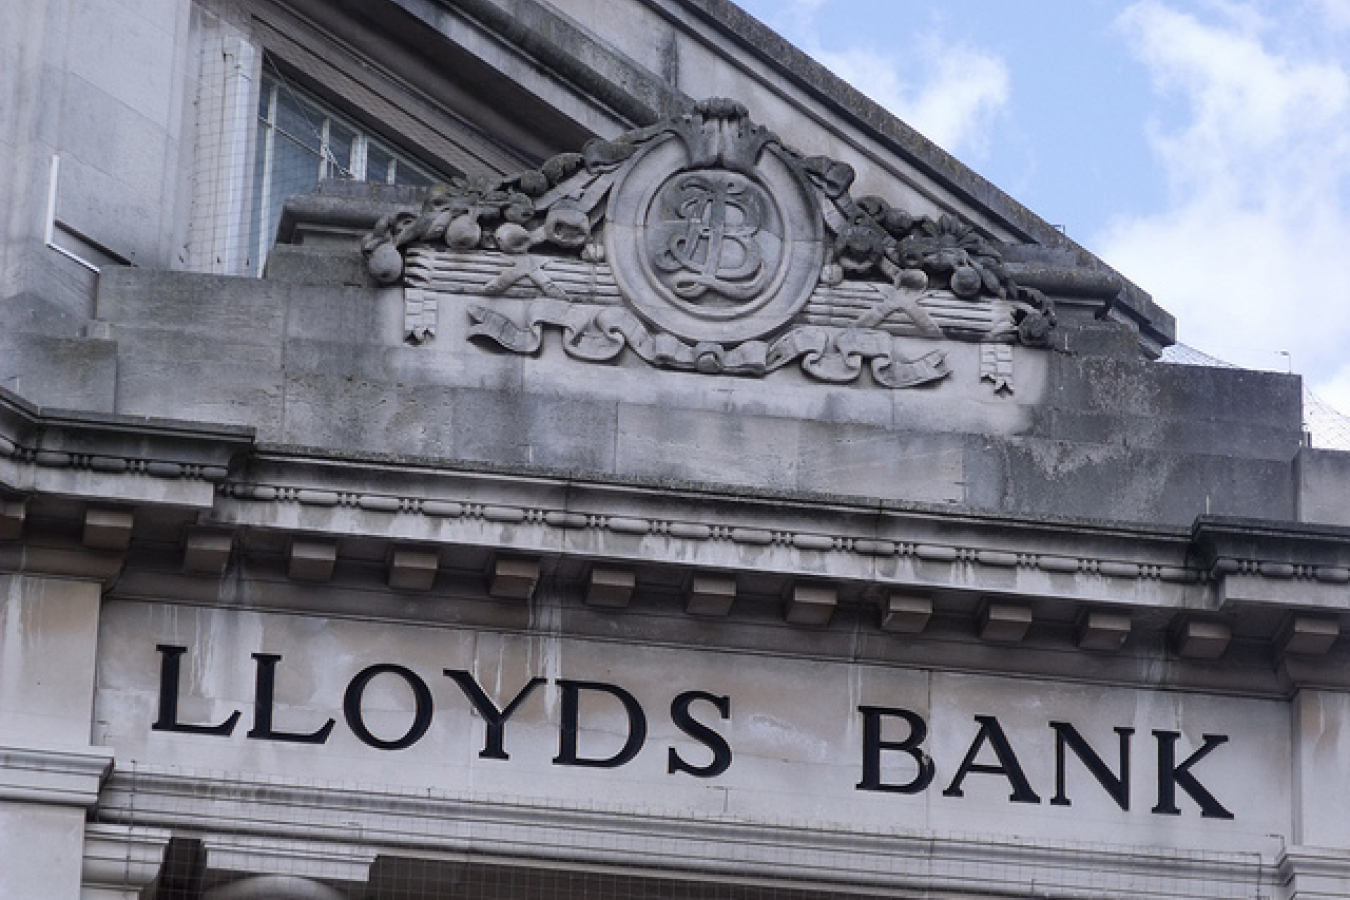 Lloyds Bank, 16 Gentlemans Walk, Norwich - Lloyds Bank sign and LB